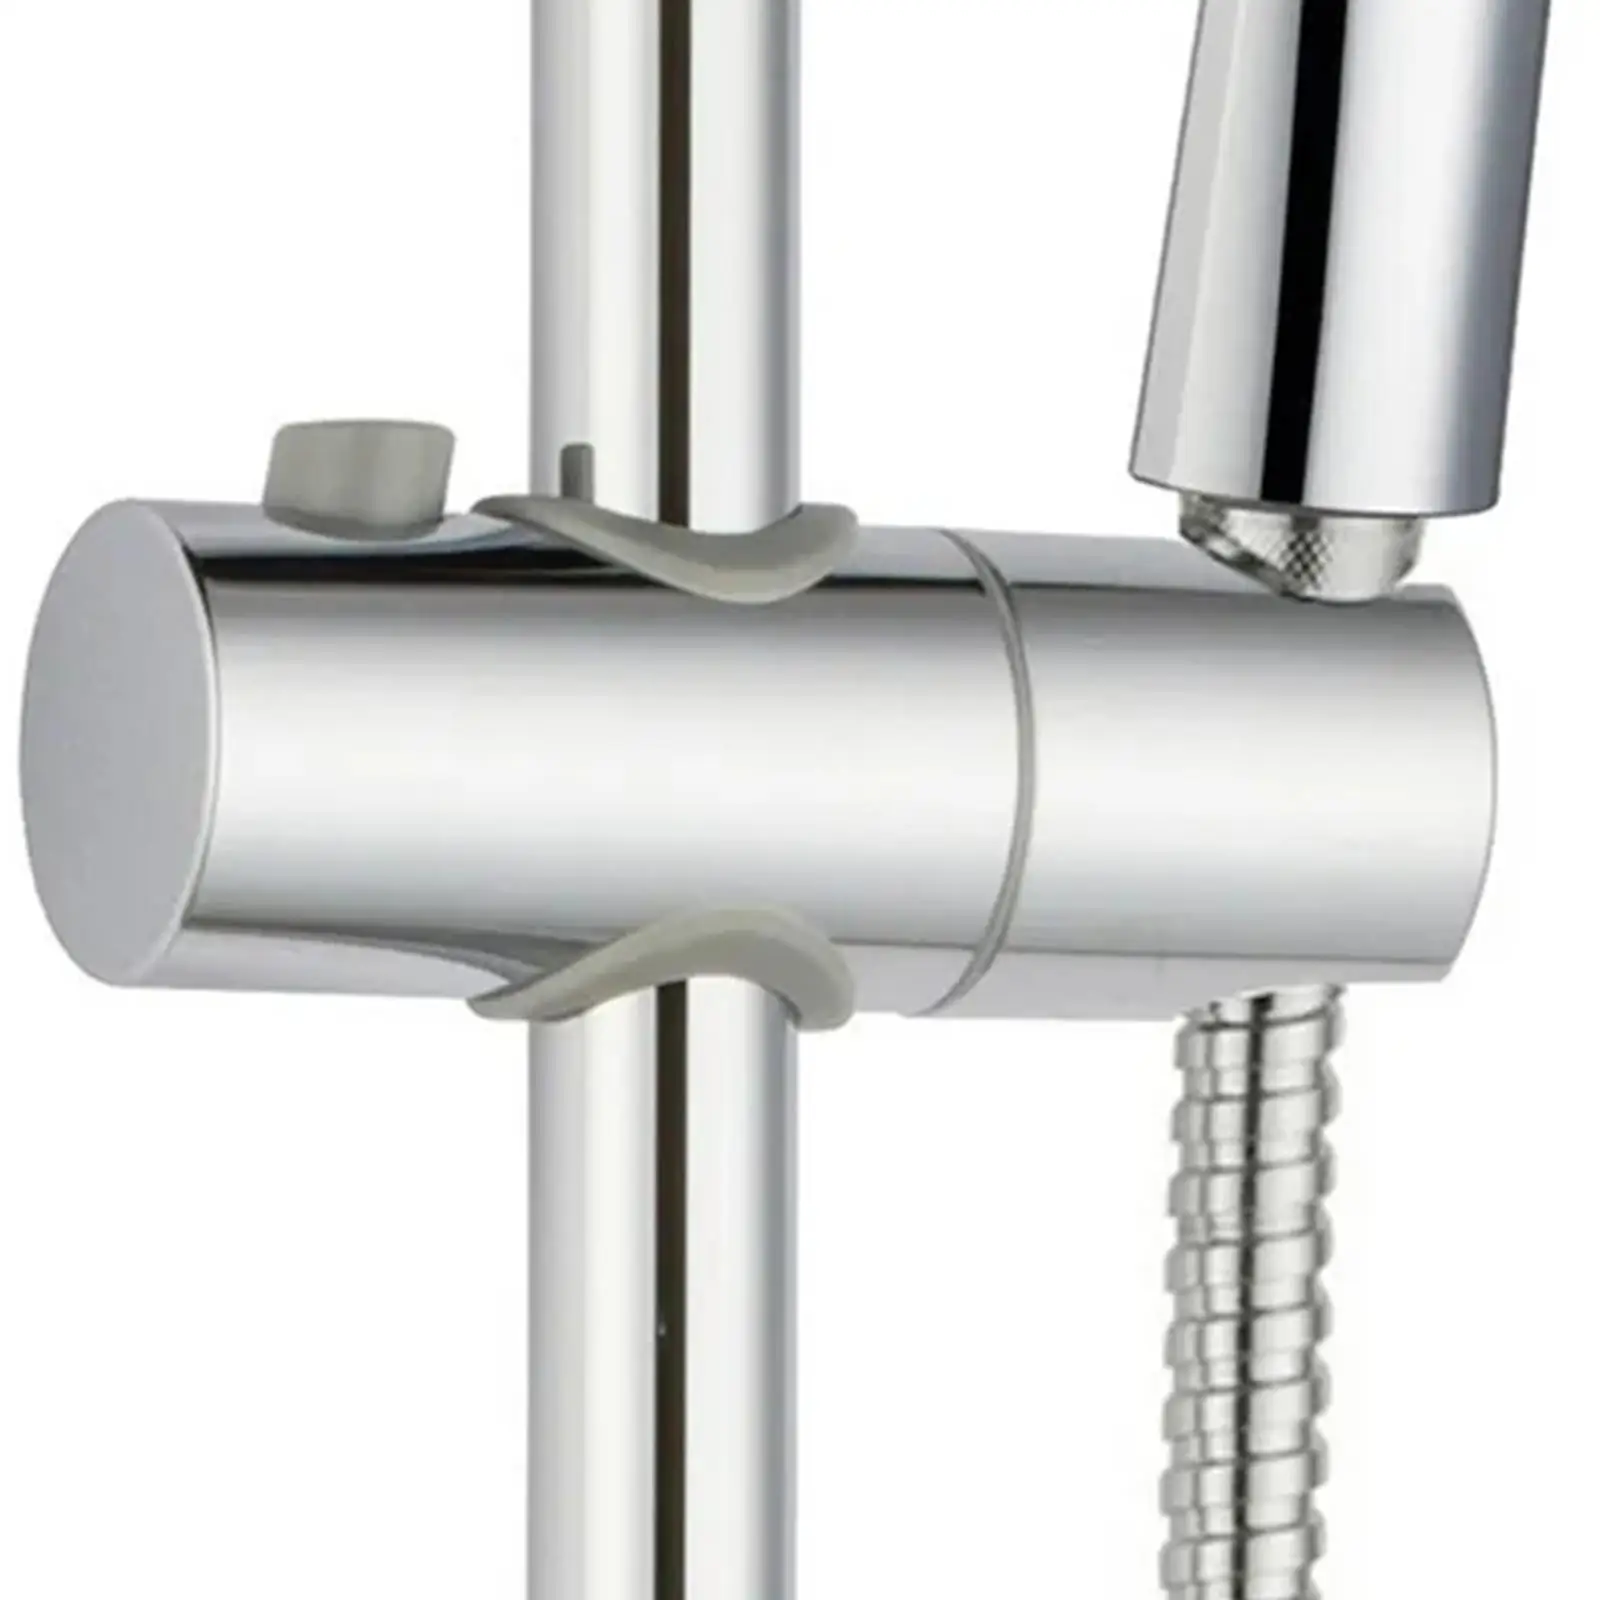 25MM ABS Chrome Handheld Shower Holder Bracket Adjustable Rail Bracket Slider Shower Mounting Brackets For Shower Head